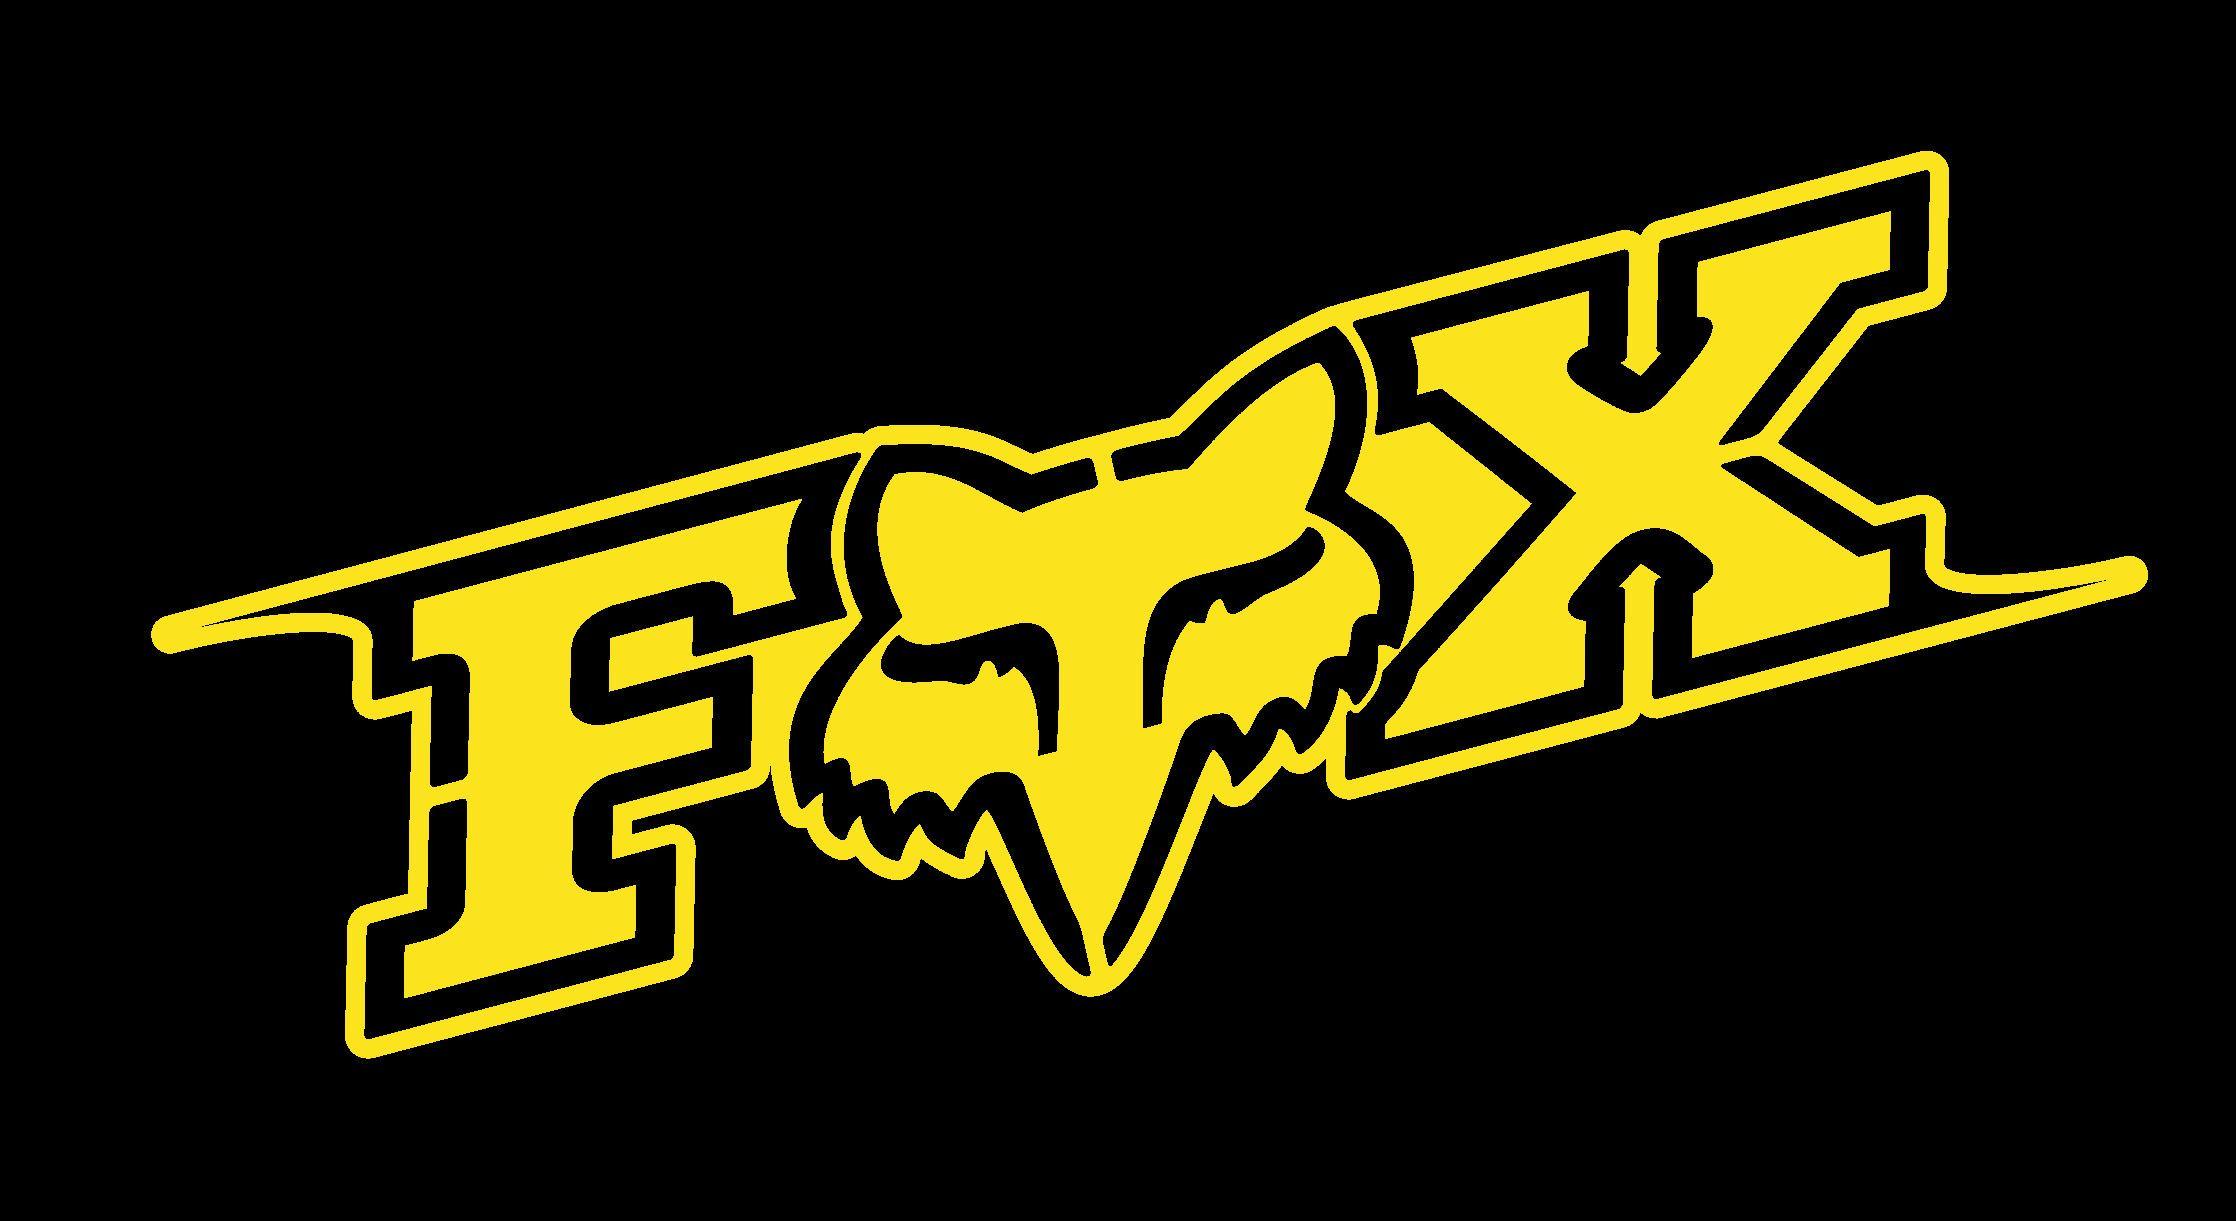 Fox Racing Logo Wallpapers